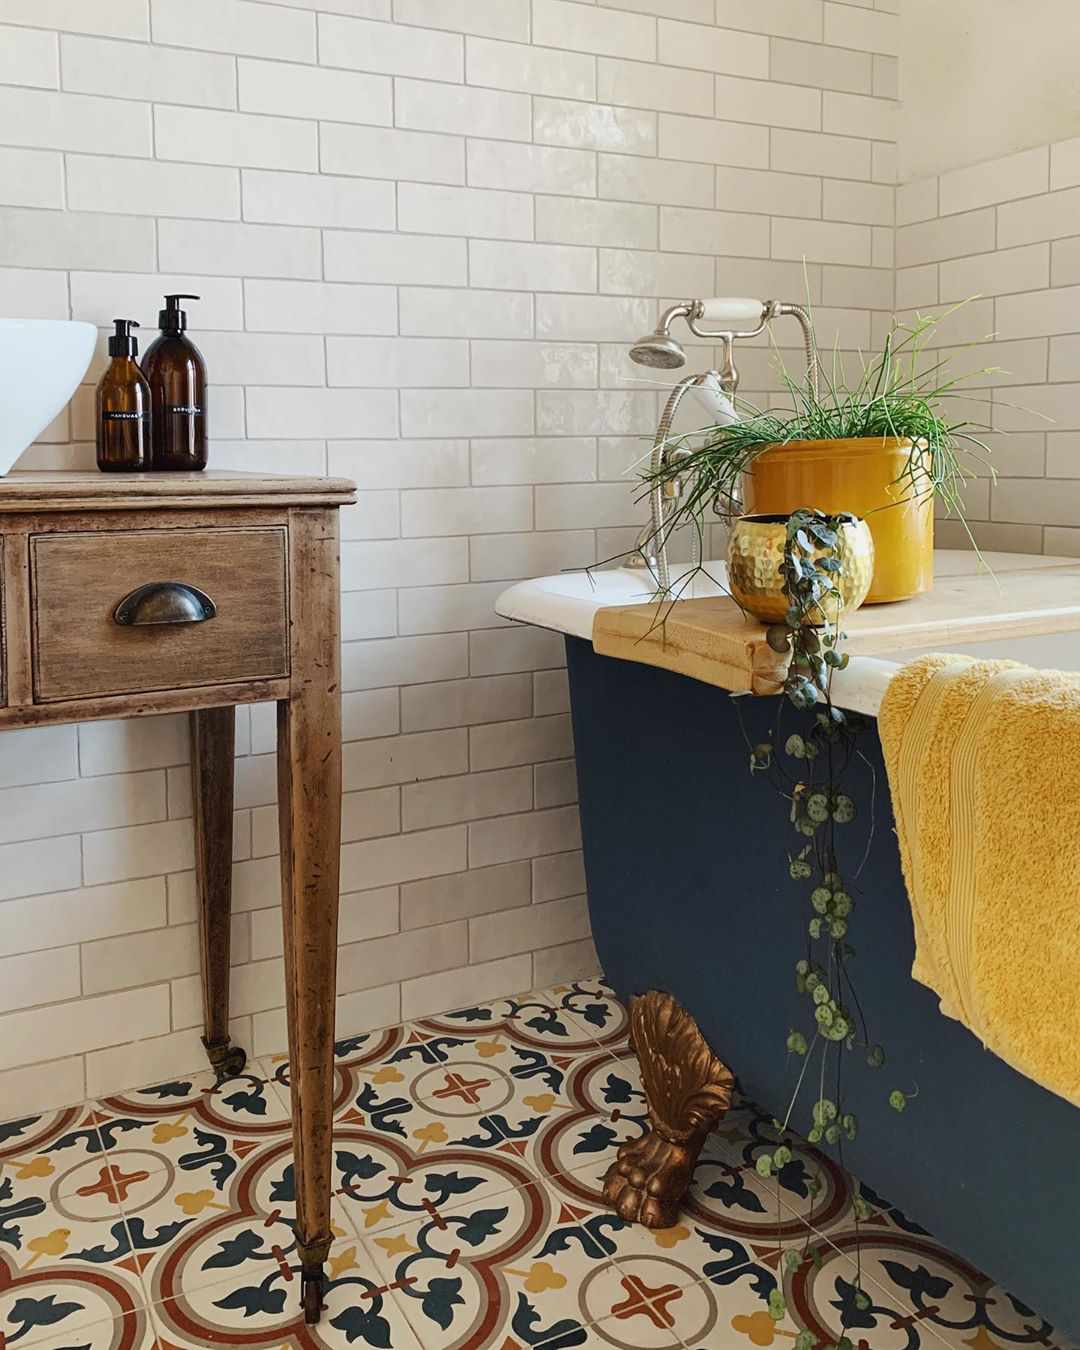 Salle de bain avec carrelage marocain coloré